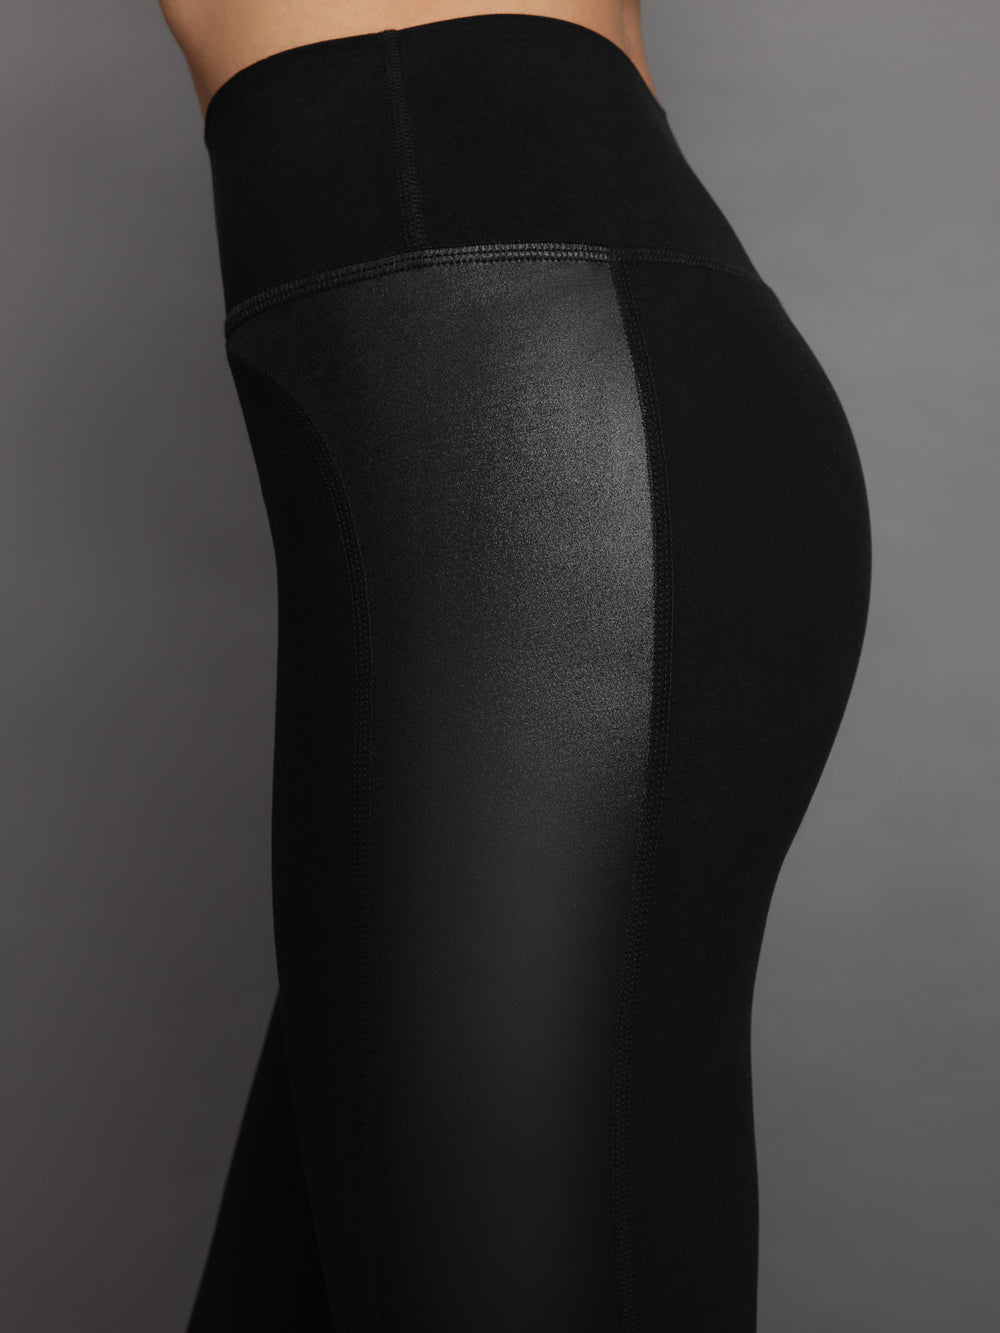 Leggings Carbon 38 Black size S International in Polyester - 40845044